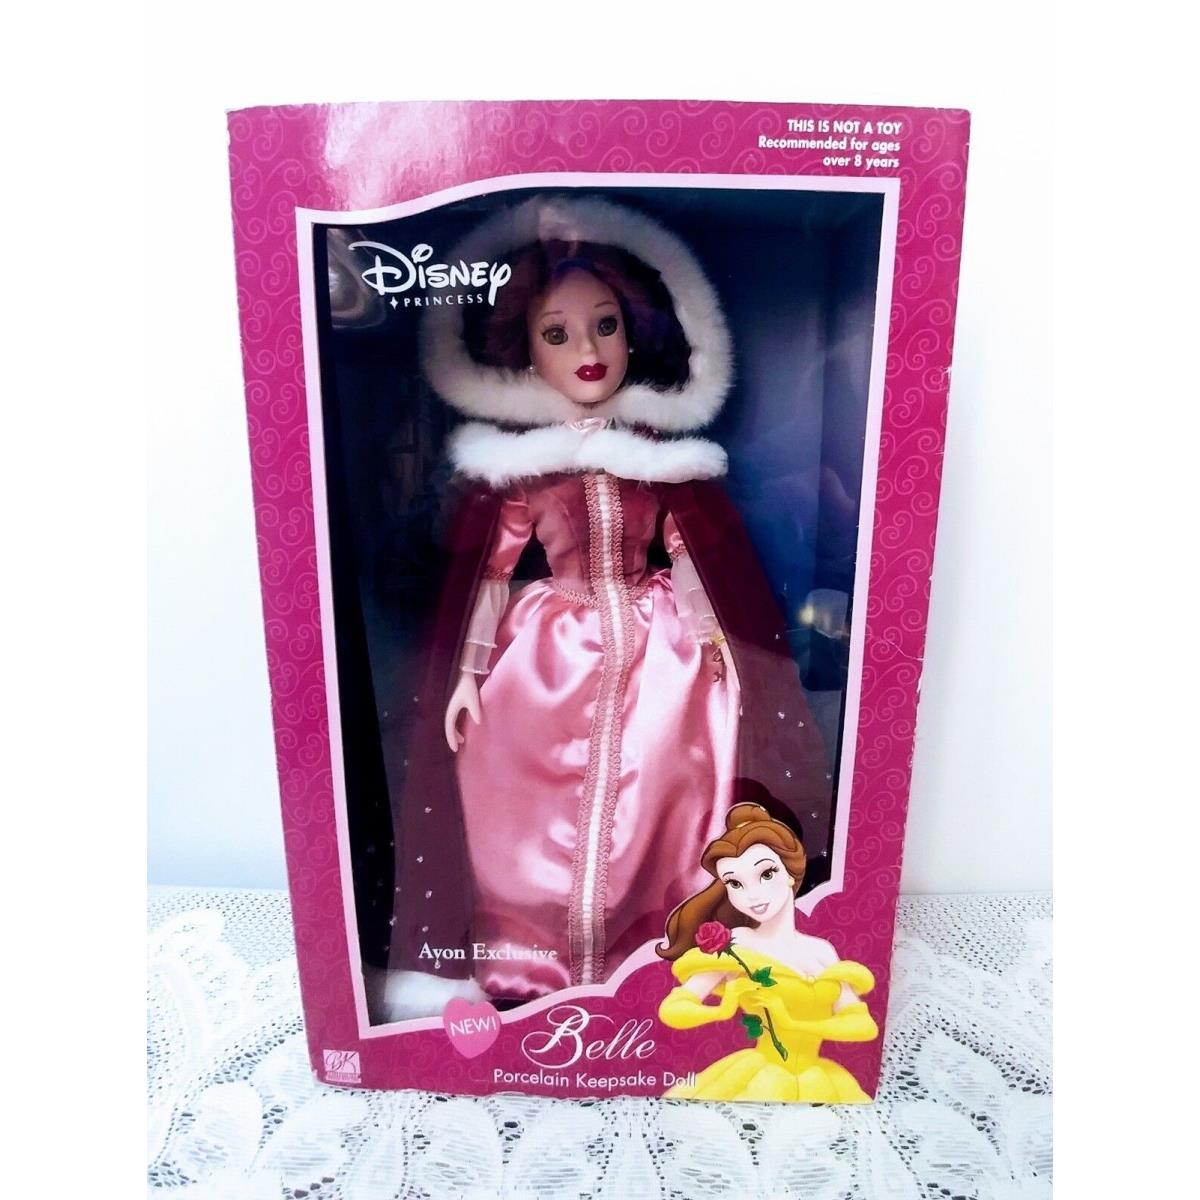 Disney Princess Belle Beauty Porcelain Keepsake Doll 2002